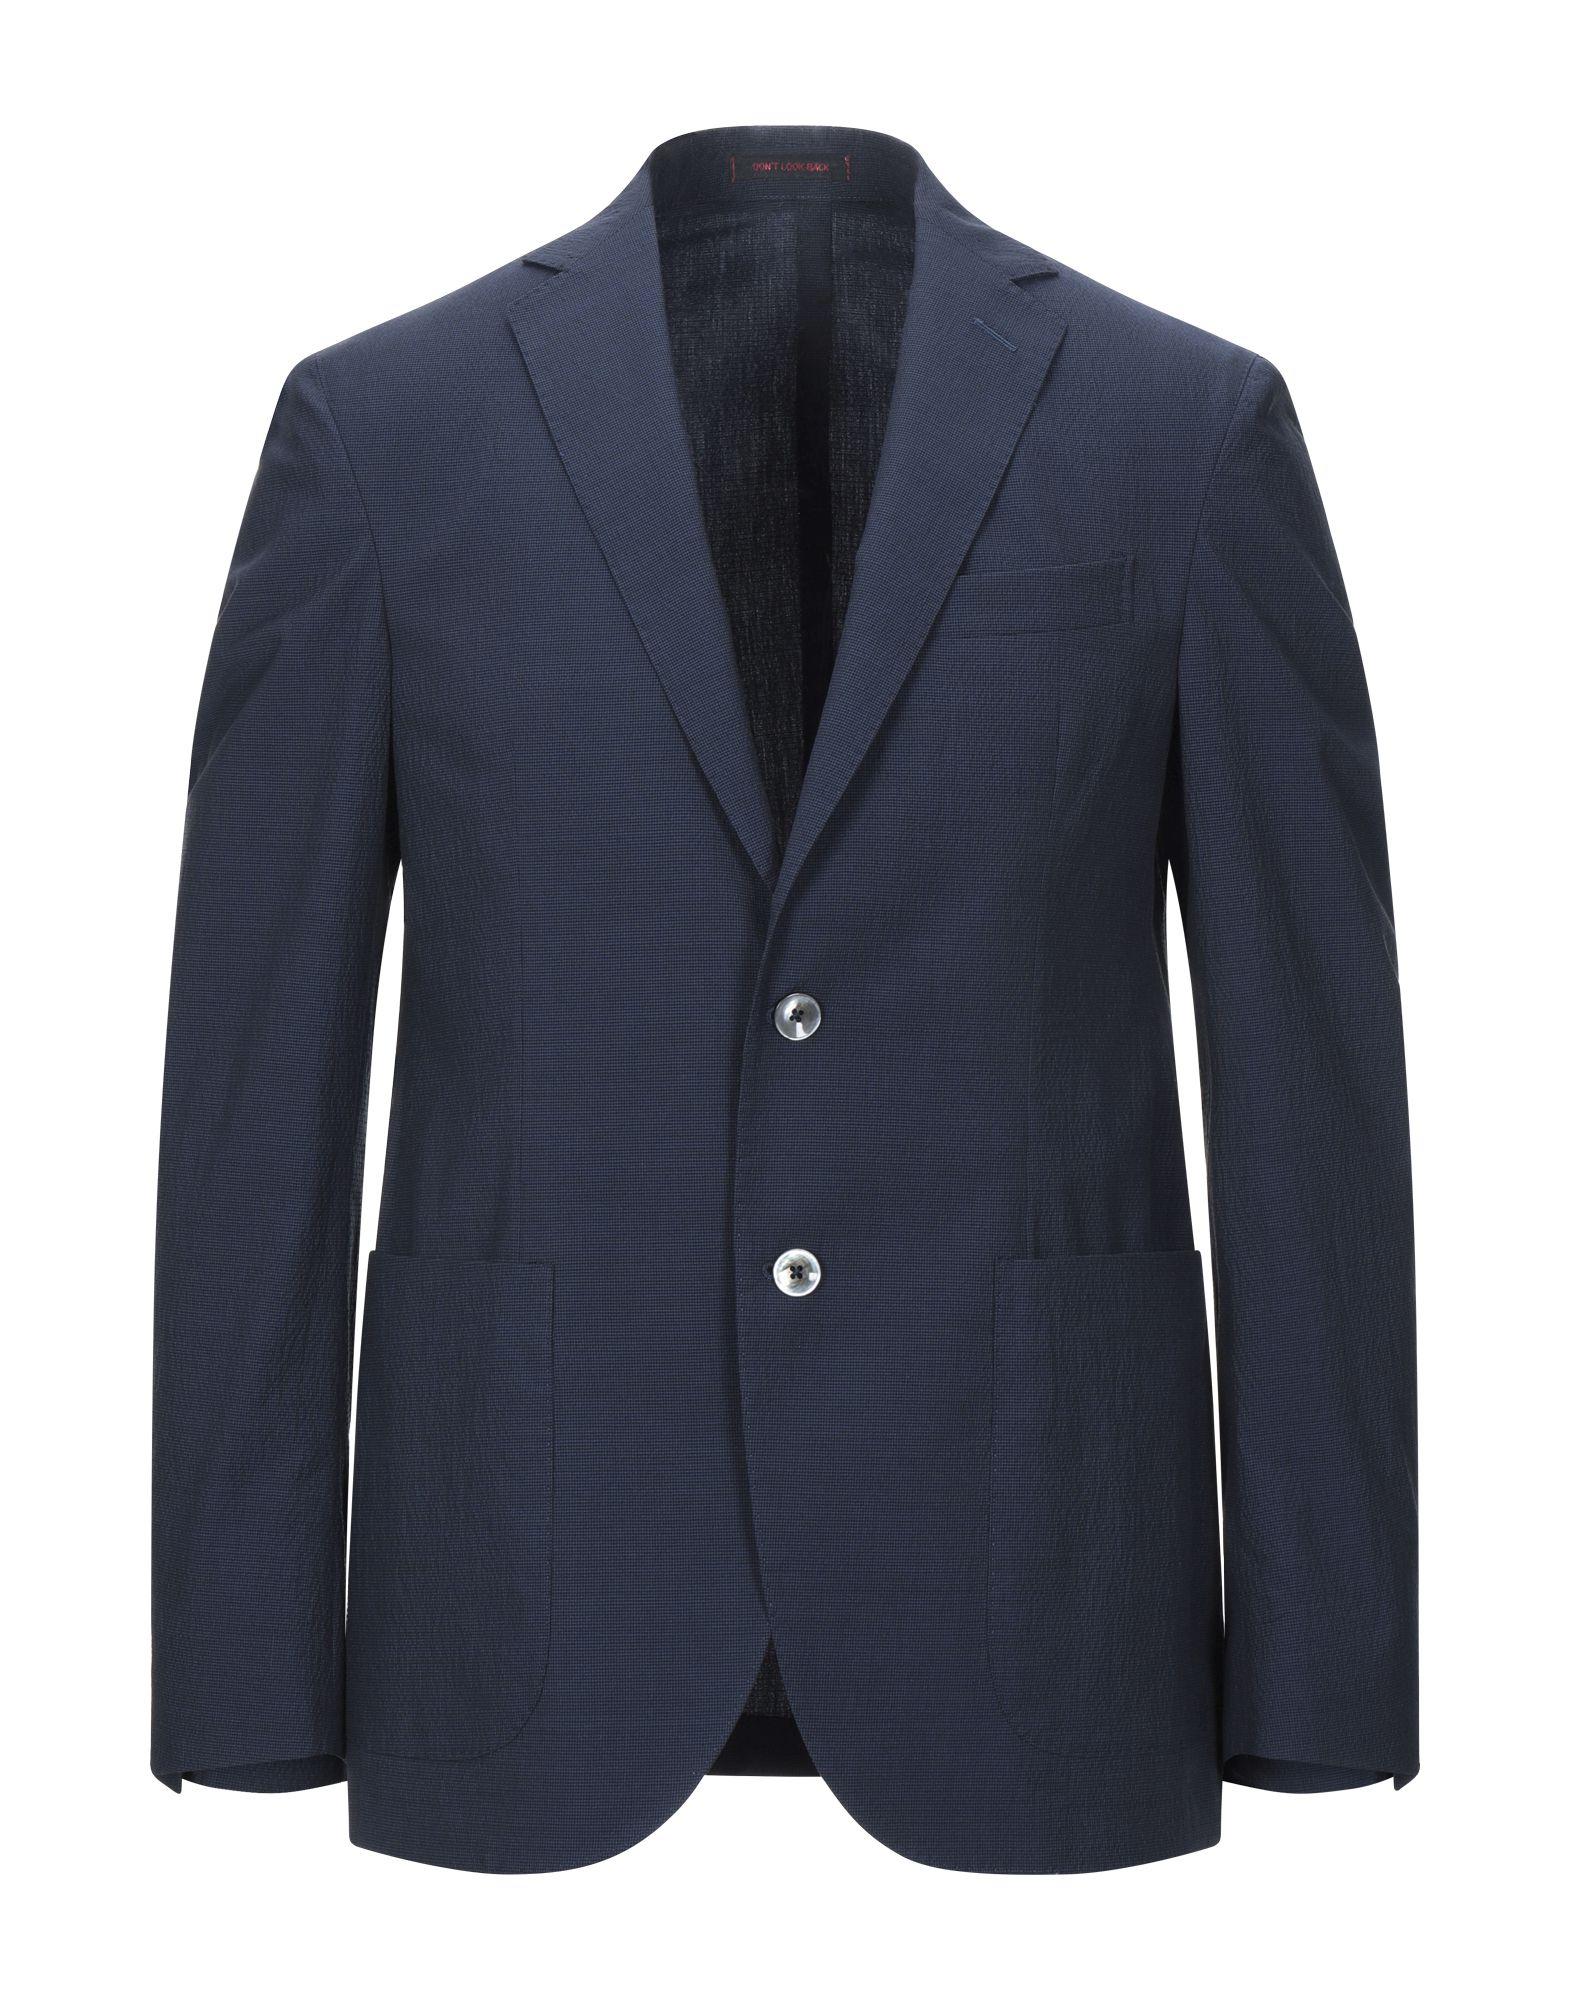 The Gigi Cotton Suit Jacket in Dark Blue (Blue) for Men - Lyst